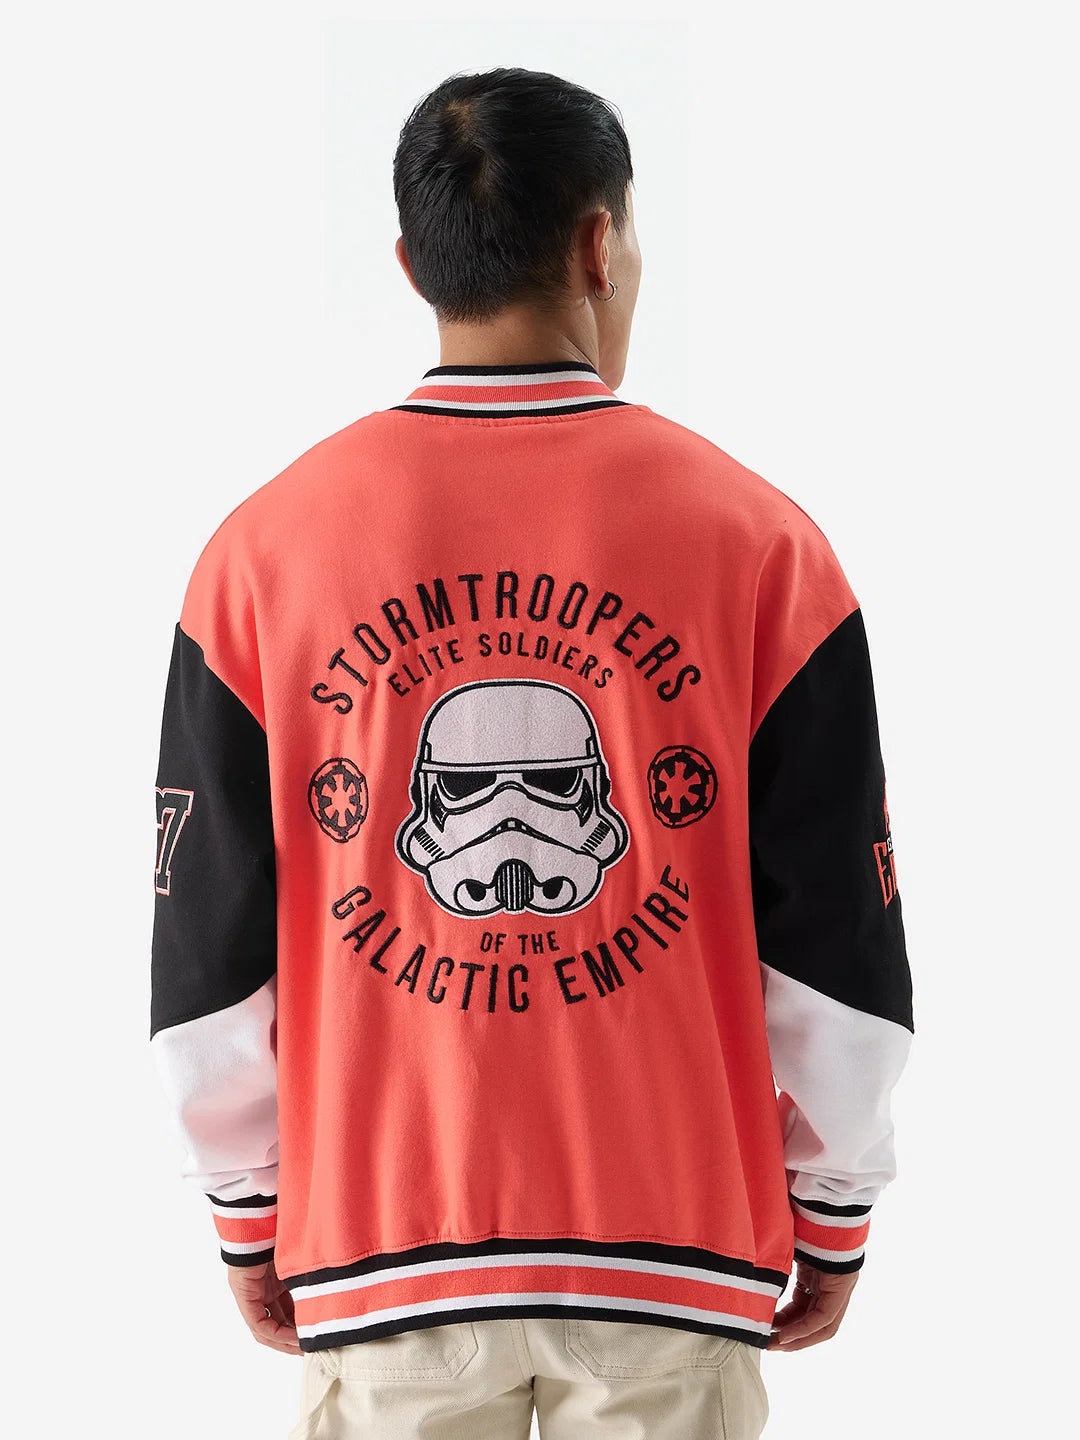 Star Wars: Stormtroopers (UK version)